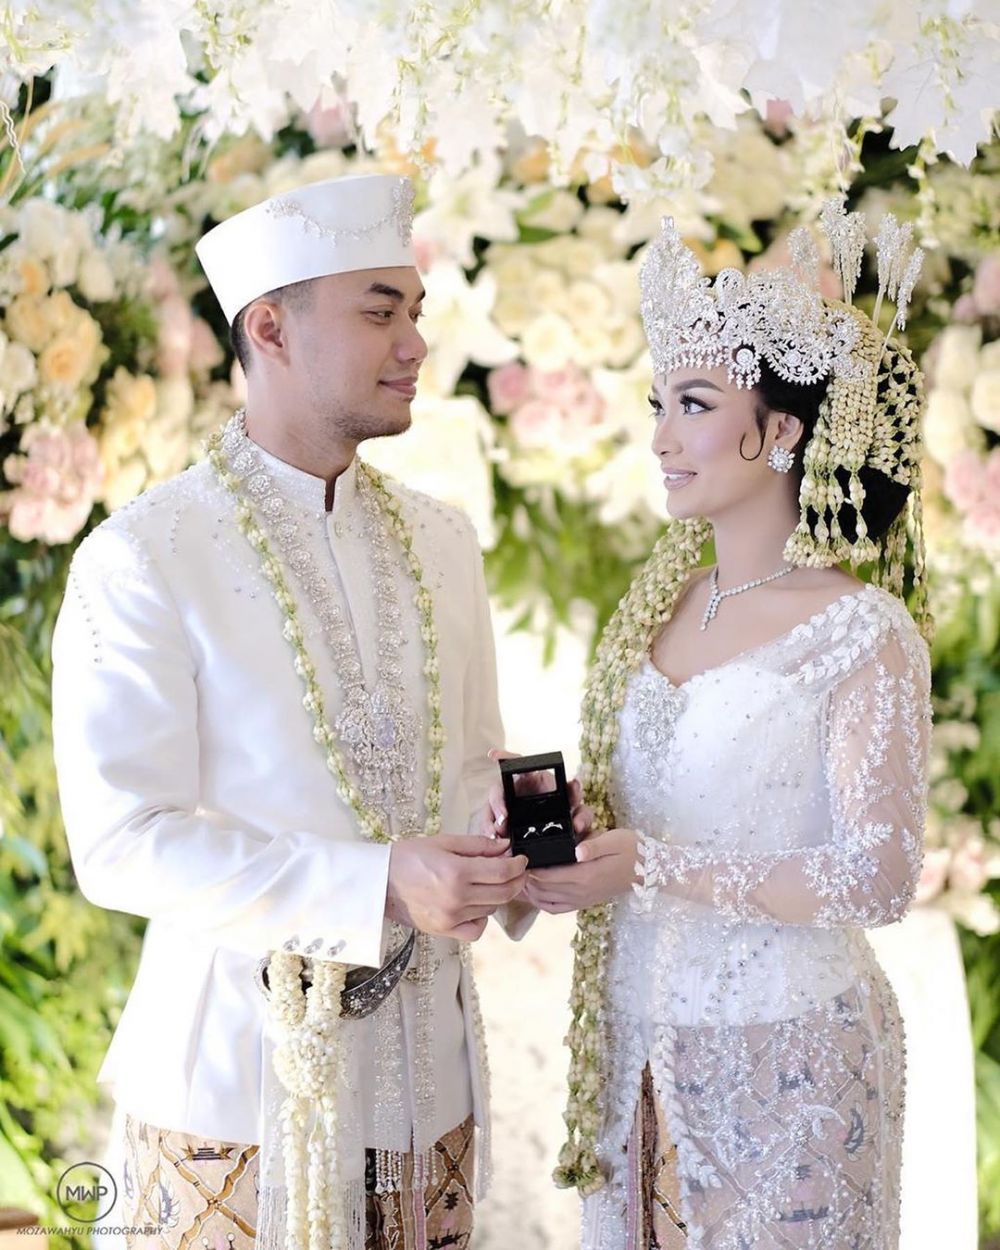 Baru diekspos, ini 10 momen pernikahan Zaskia Gotik & Sirajuddin